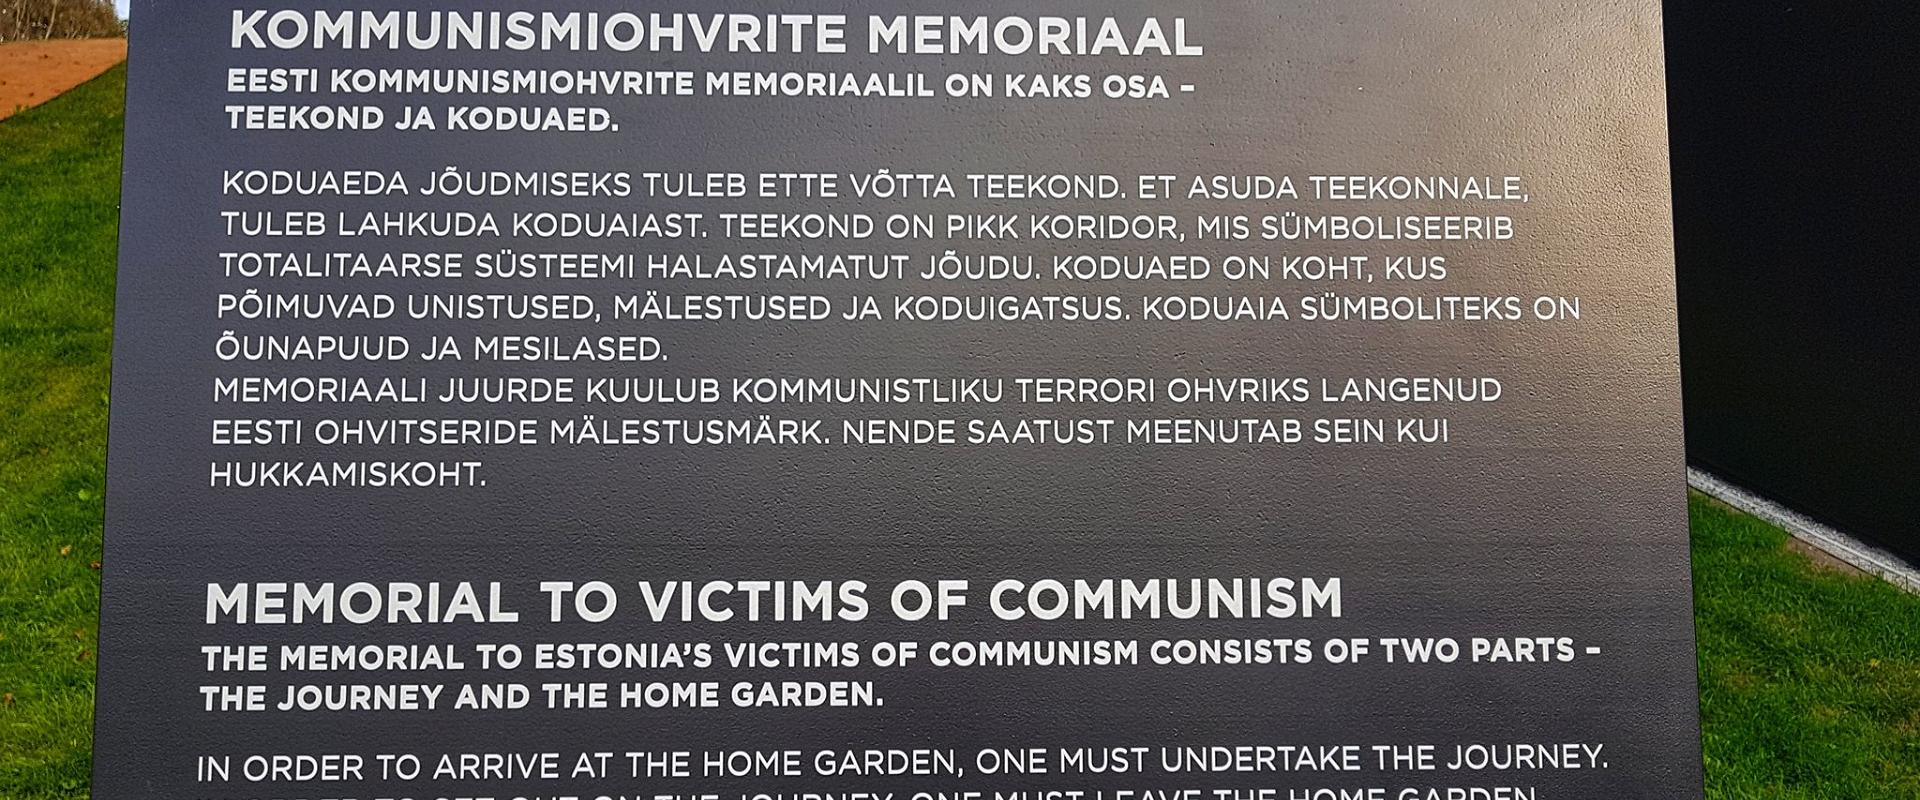 Muistomerkki kommunismin uhreille